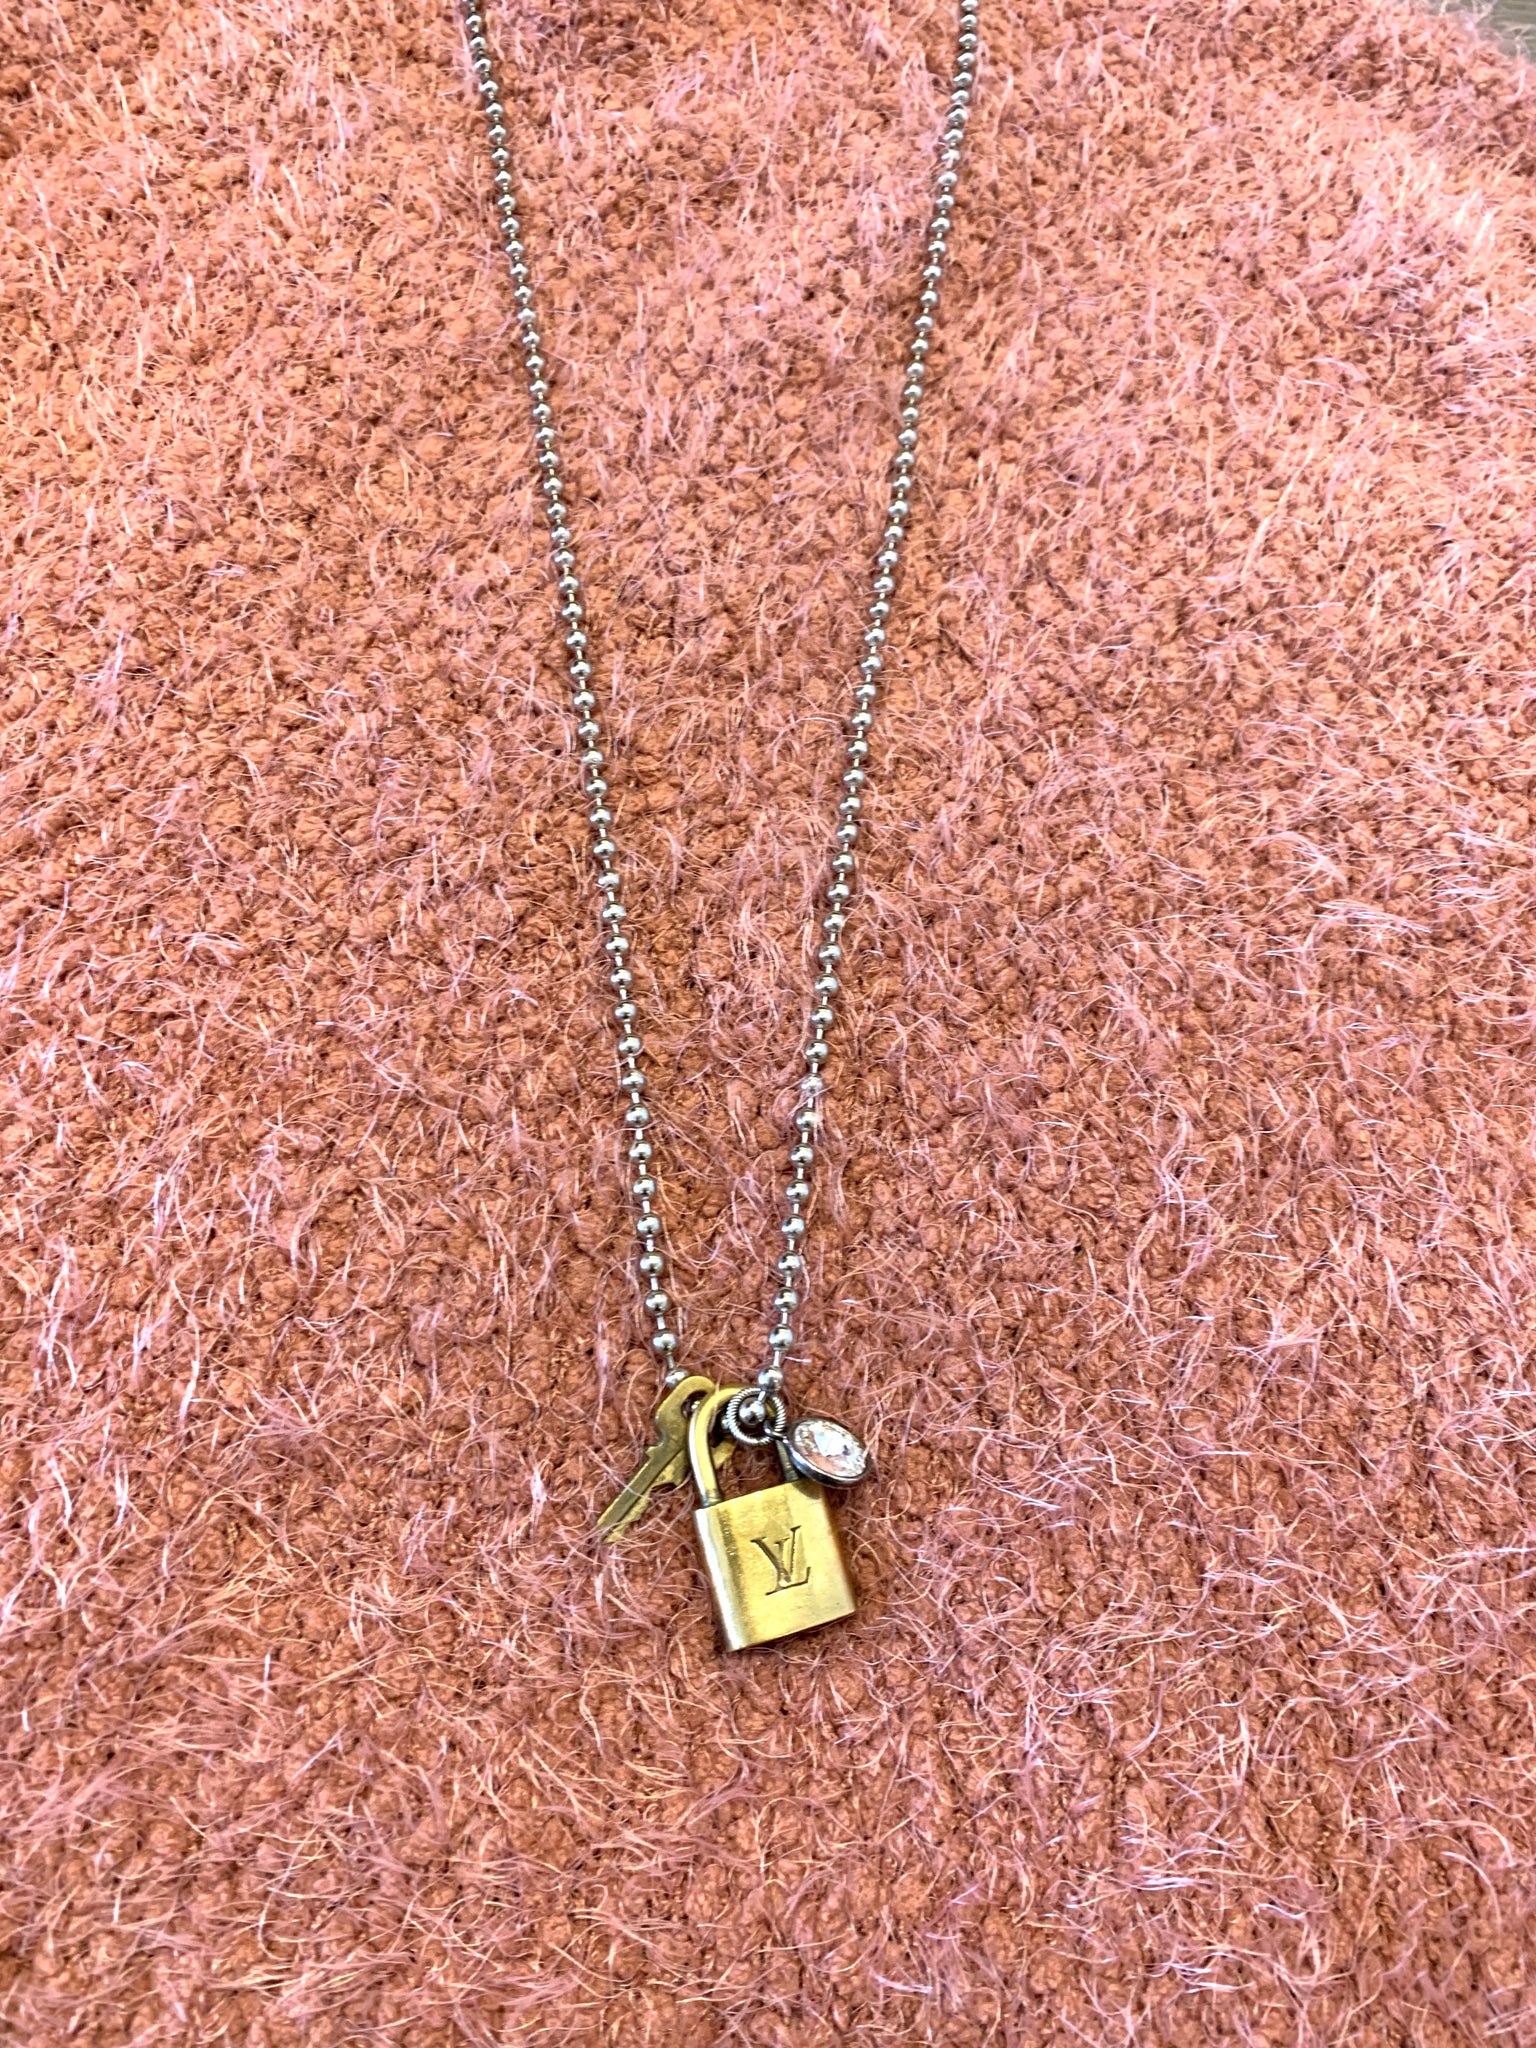 vuitton gold lock necklace